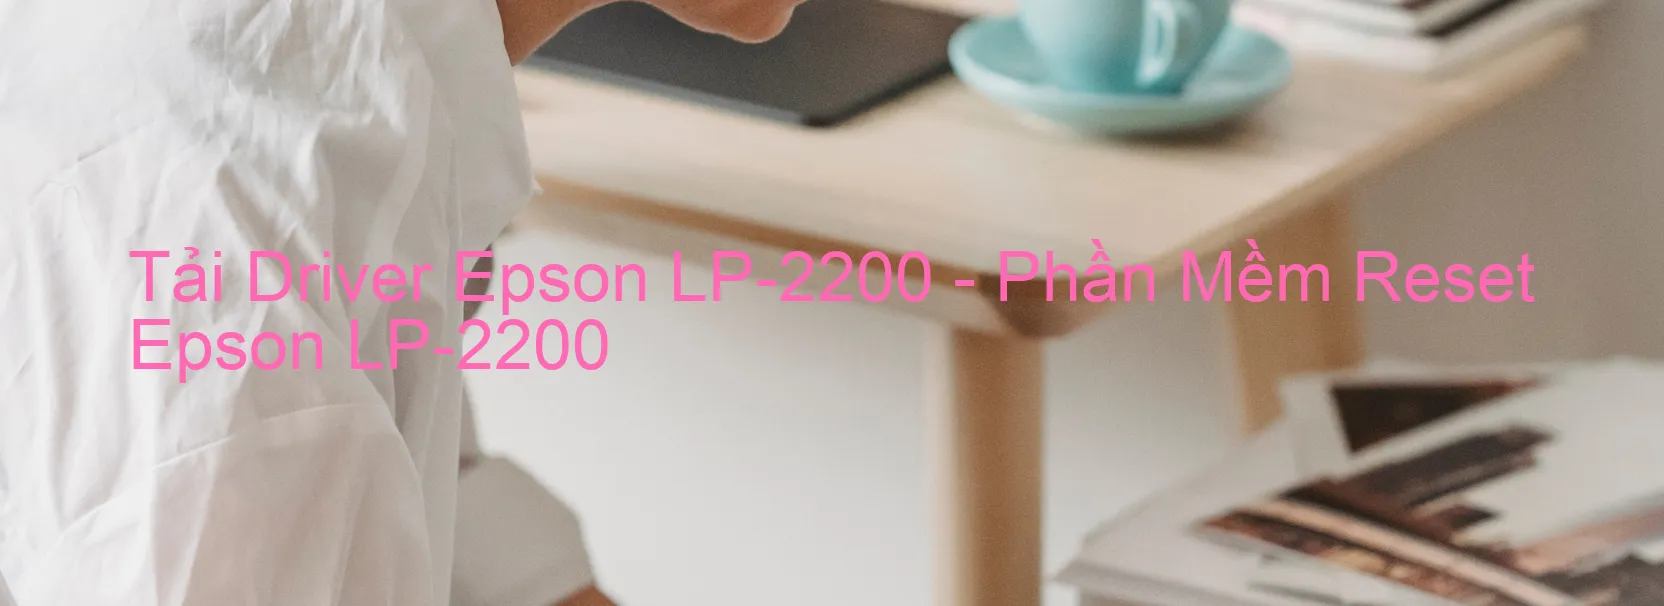 Driver Epson LP-2200, Phần Mềm Reset Epson LP-2200